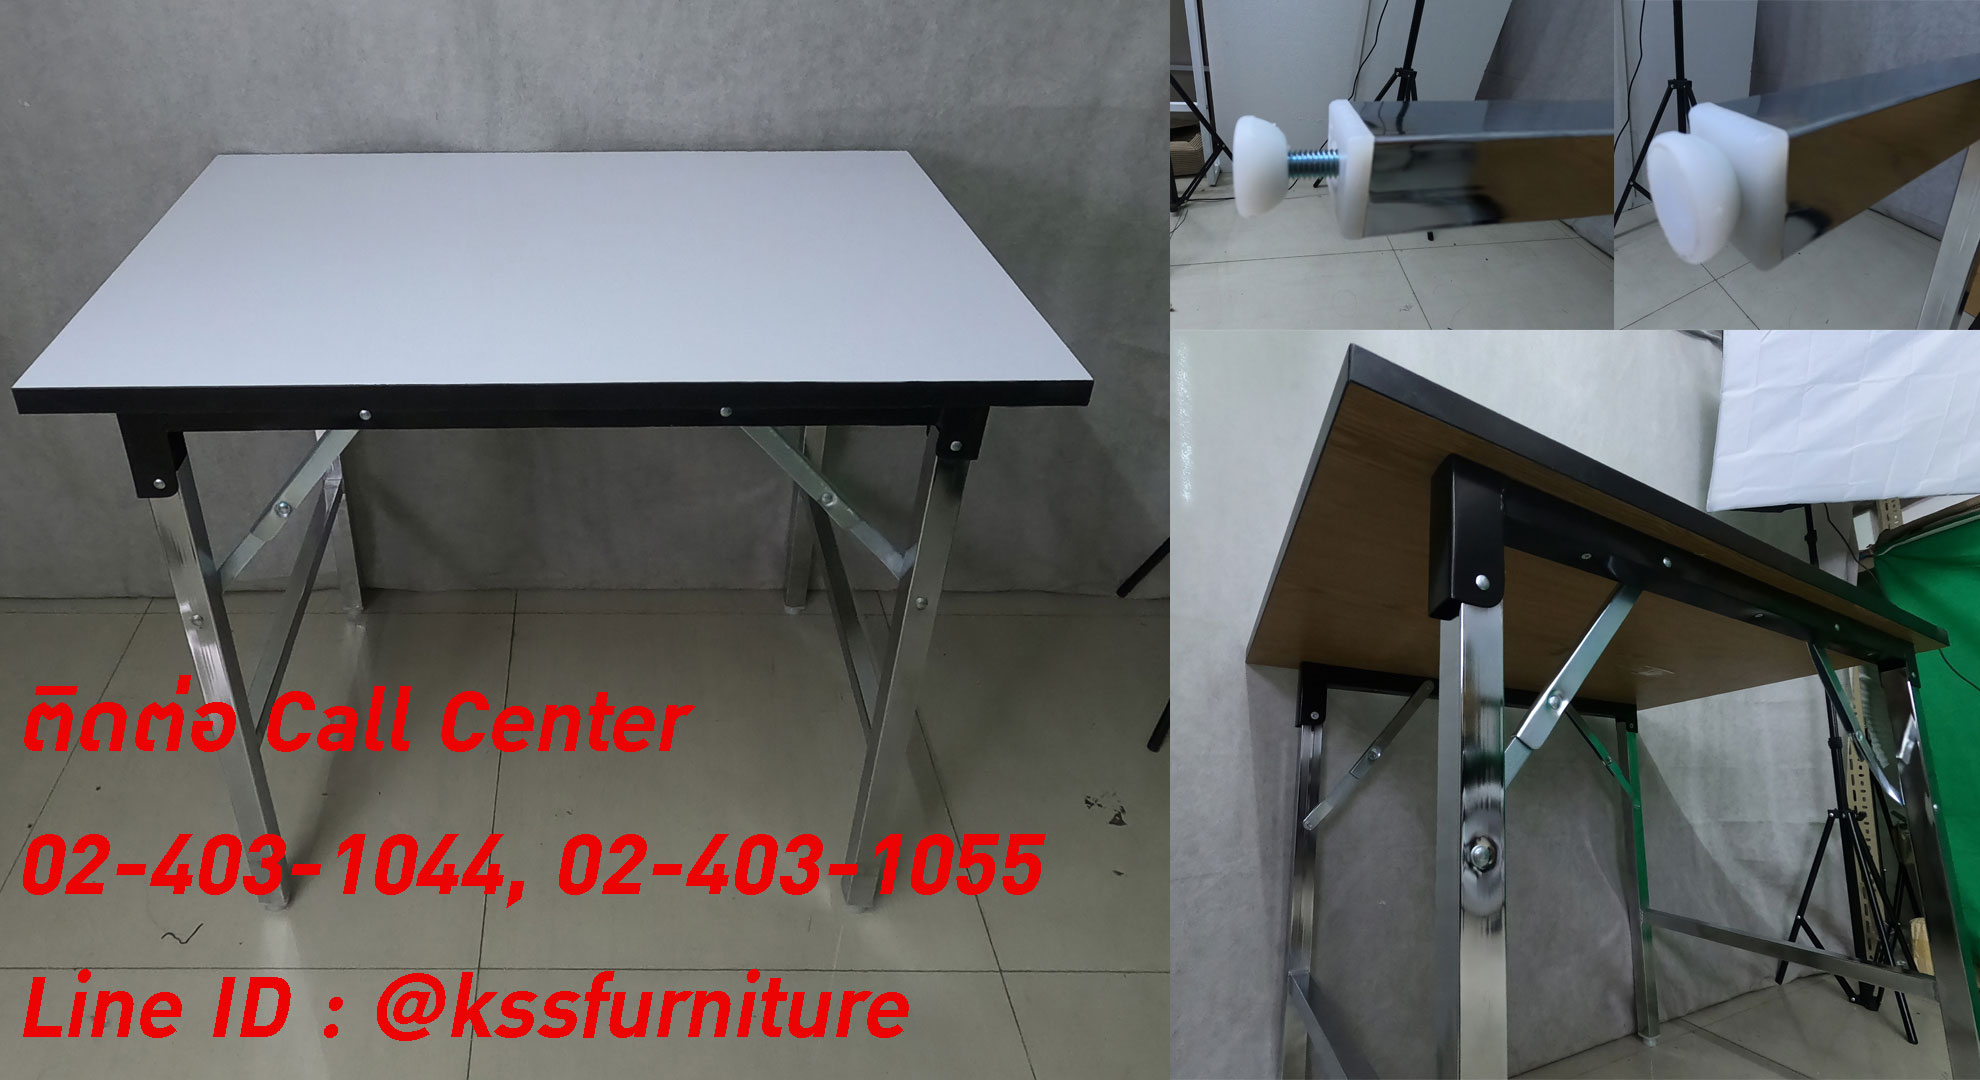 20078::PP::โต๊ะพับอเนกประสงค์ ผลิตจากไม้ Particle Board ตันเต็มแผ่น ท็อปโต๊ะหนา 25 มม. ปิดขอบ PVC Edge สีดำ หนา 1 มม. ปิดผิว laminate Formica สีขาว ทนความร้อน 50 องศา หนขาชุปโครเมี่ยมอย่างดี